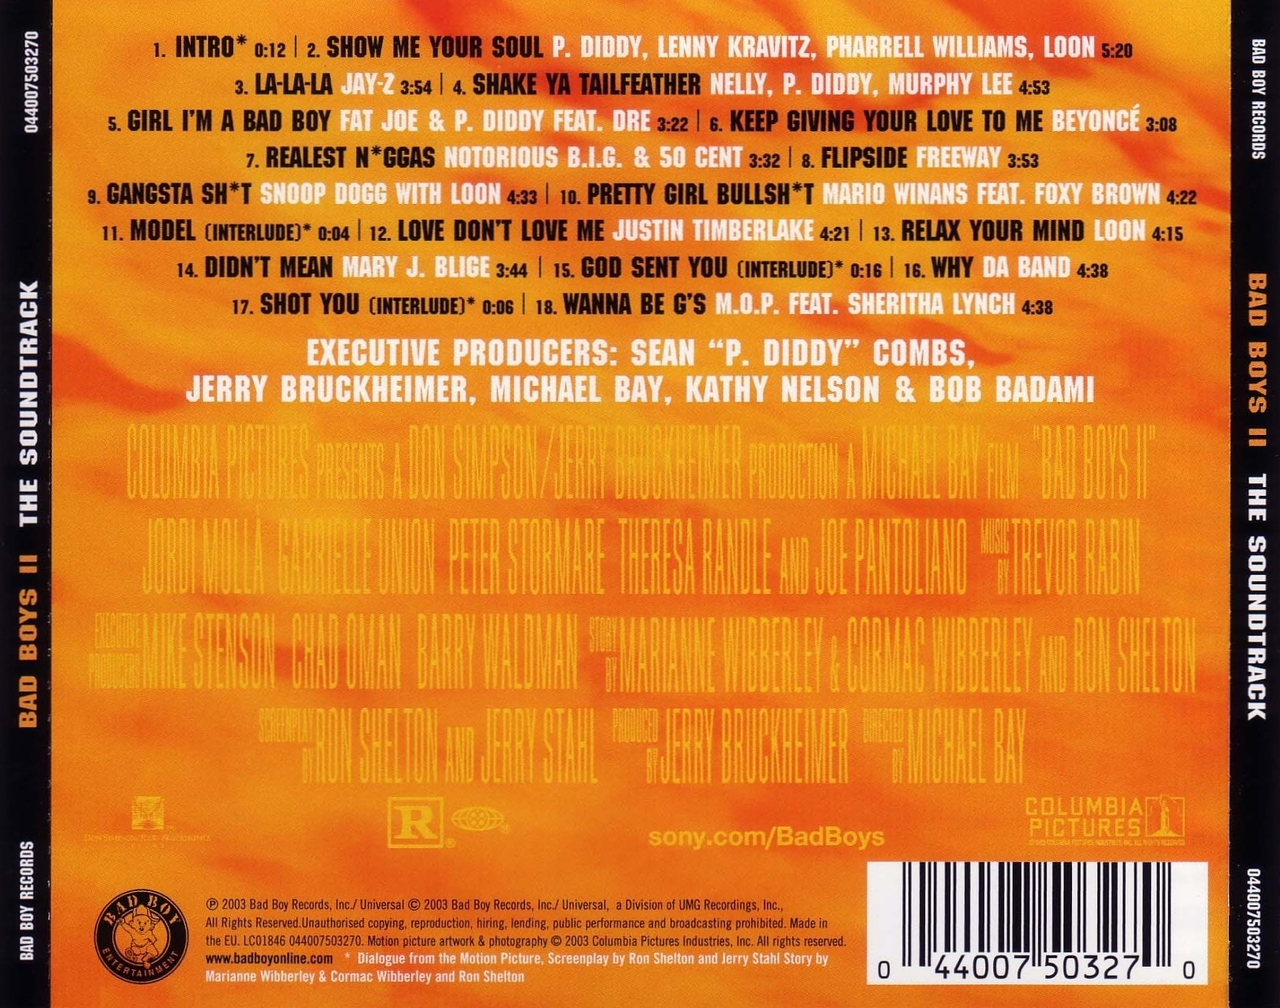 BAD BOYS II (2003): "Shake Ya Tailfeather," Murphy Lee feat. Nelly & Diddy